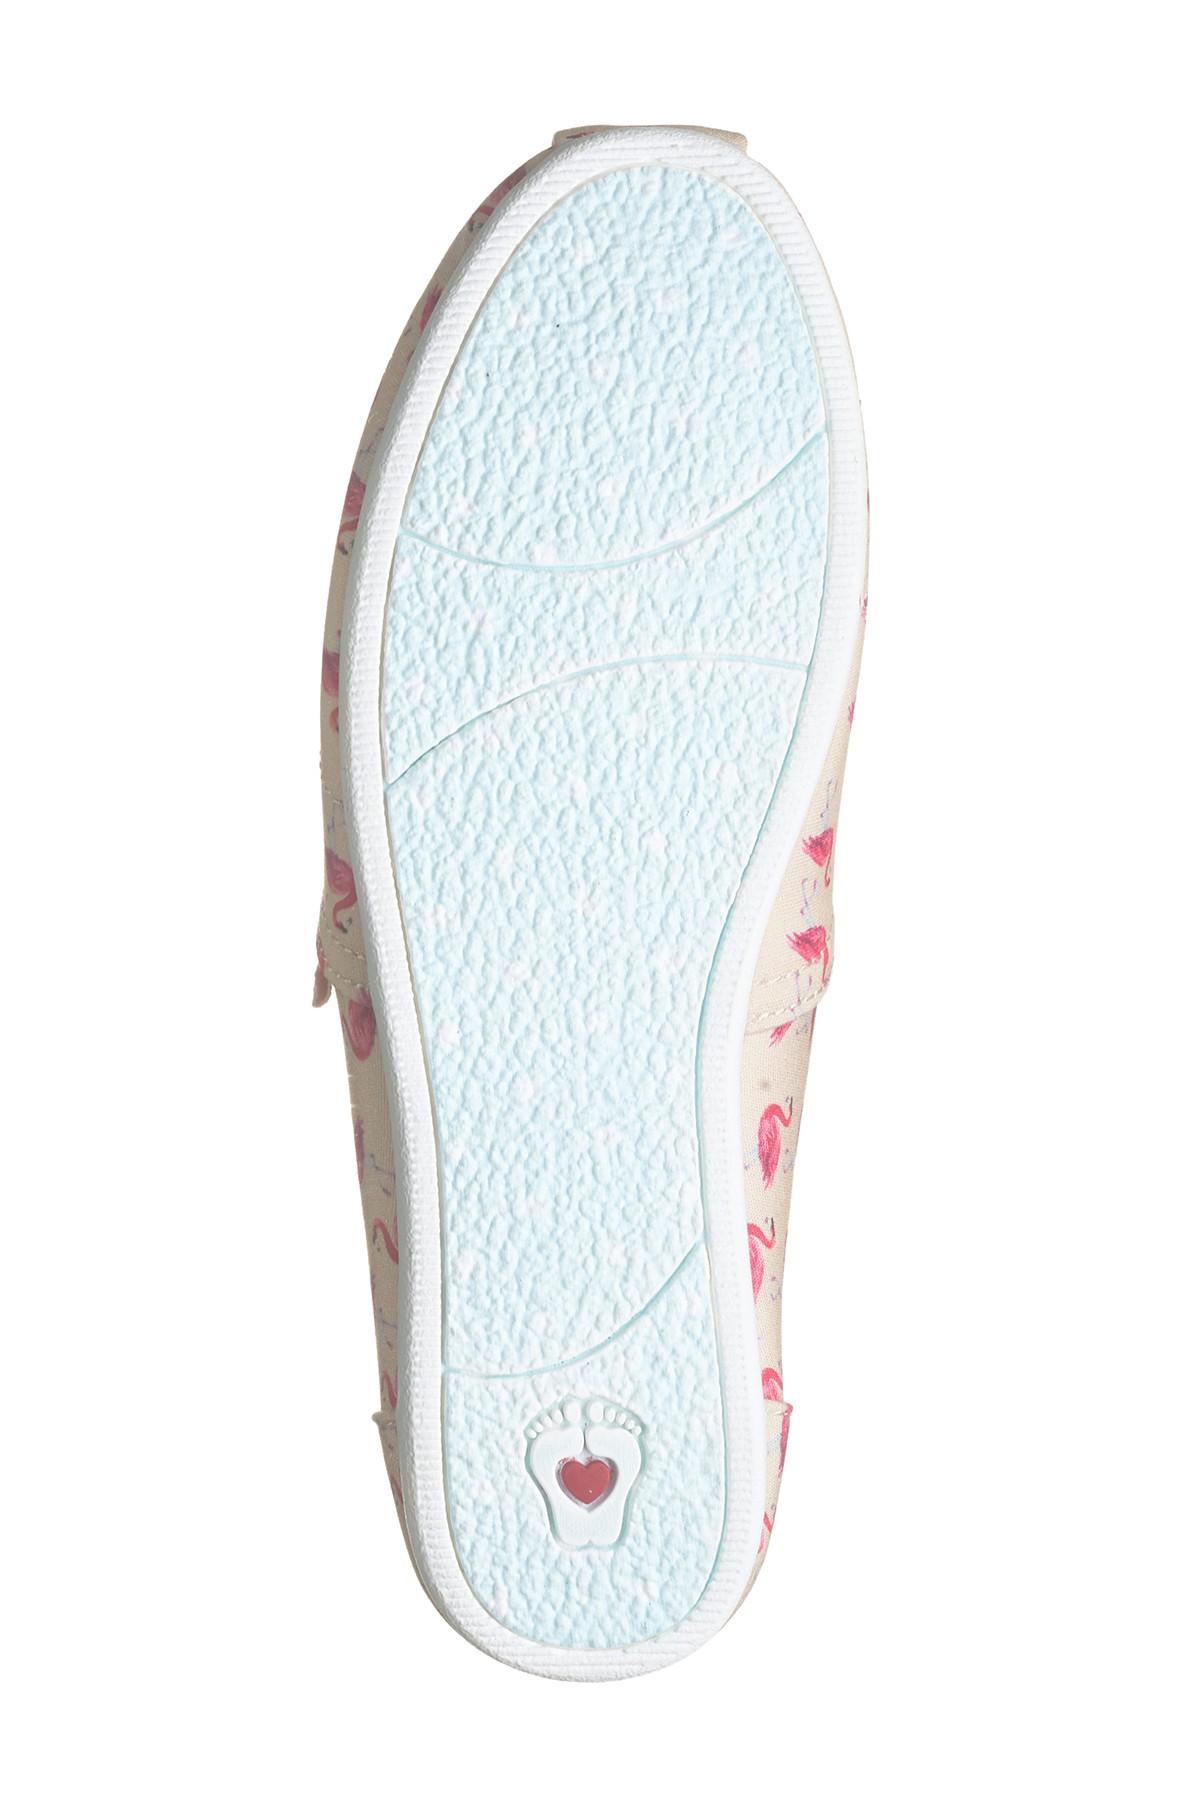 Skechers Bobs Flamingo Slip-on Sneaker in Pink | Lyst